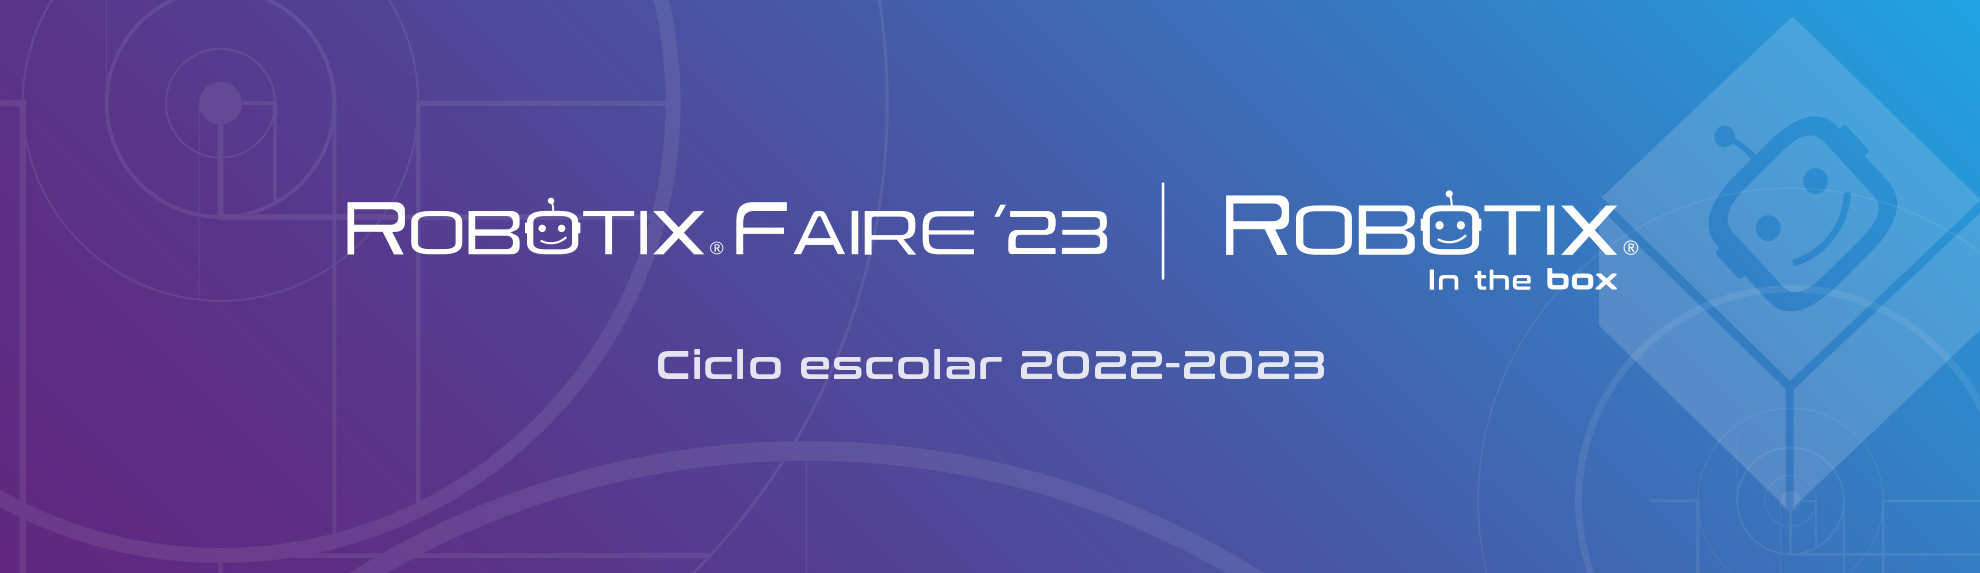 Robotix Faire 23 - Ciclo escolar 2022 - 2023